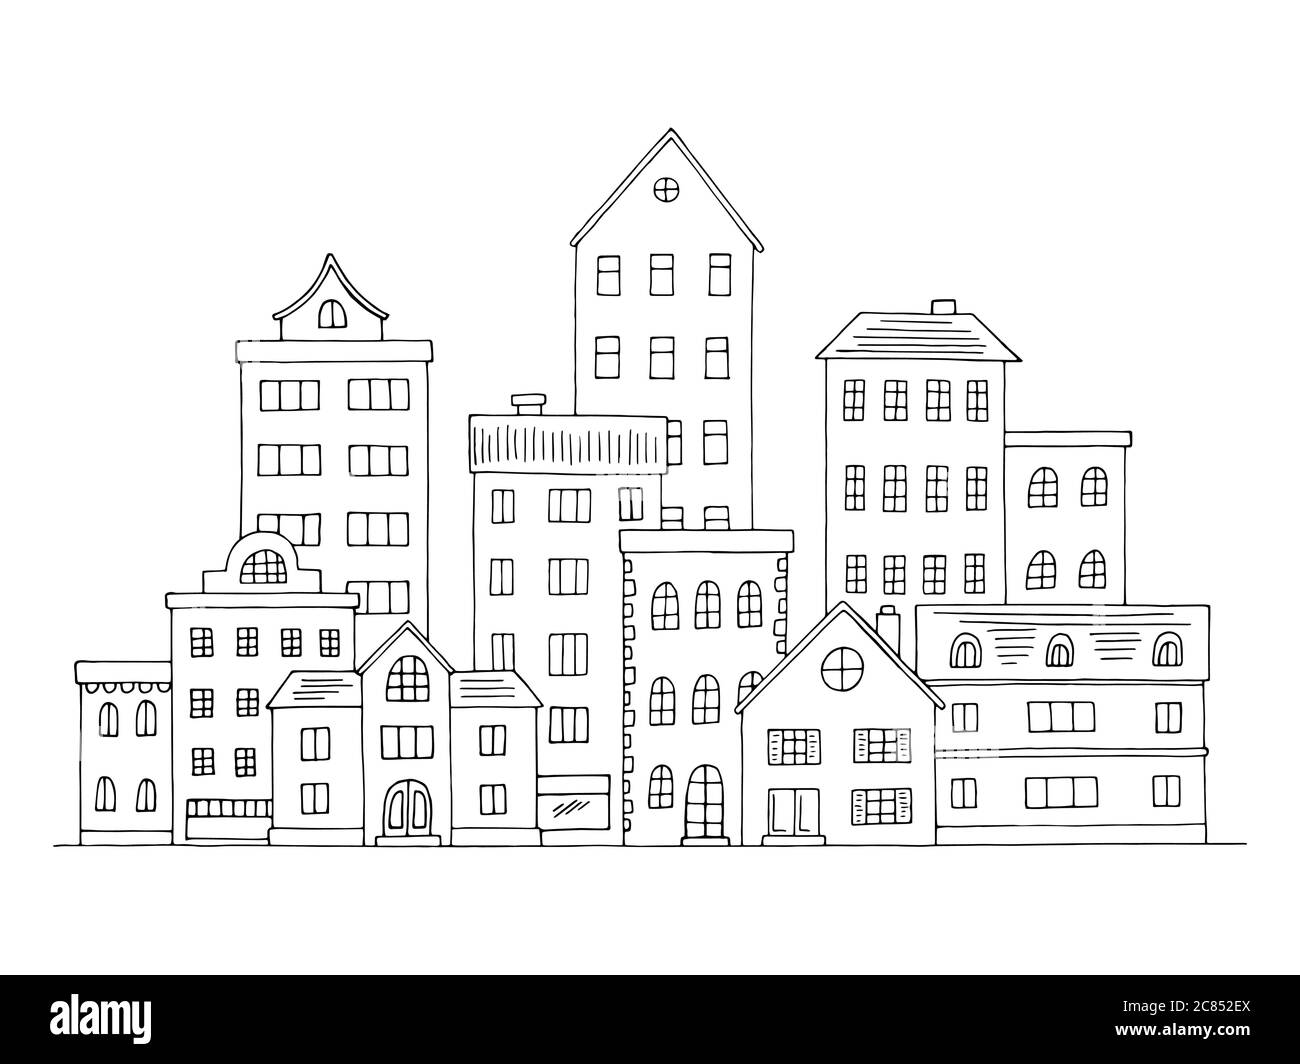 Stadtgrafik schwarz weiß Stadtbild Skyline Skizze Illustration Vektor Stock Vektor